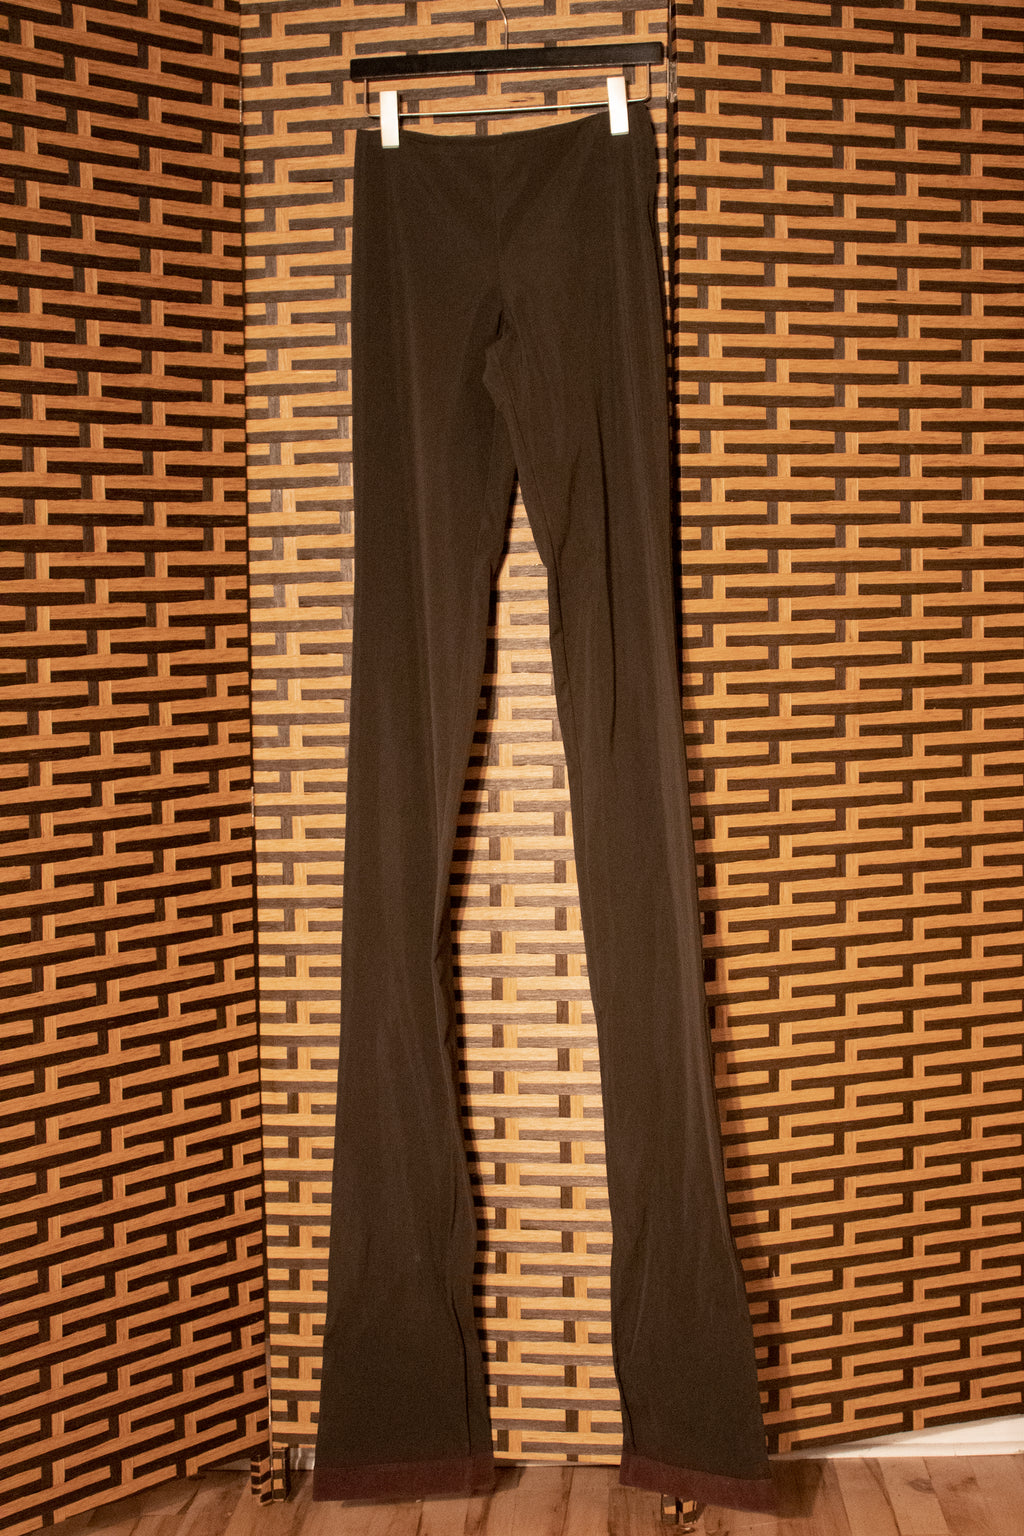 Jean Paul Gaultier wool blend olive "giant" trousers